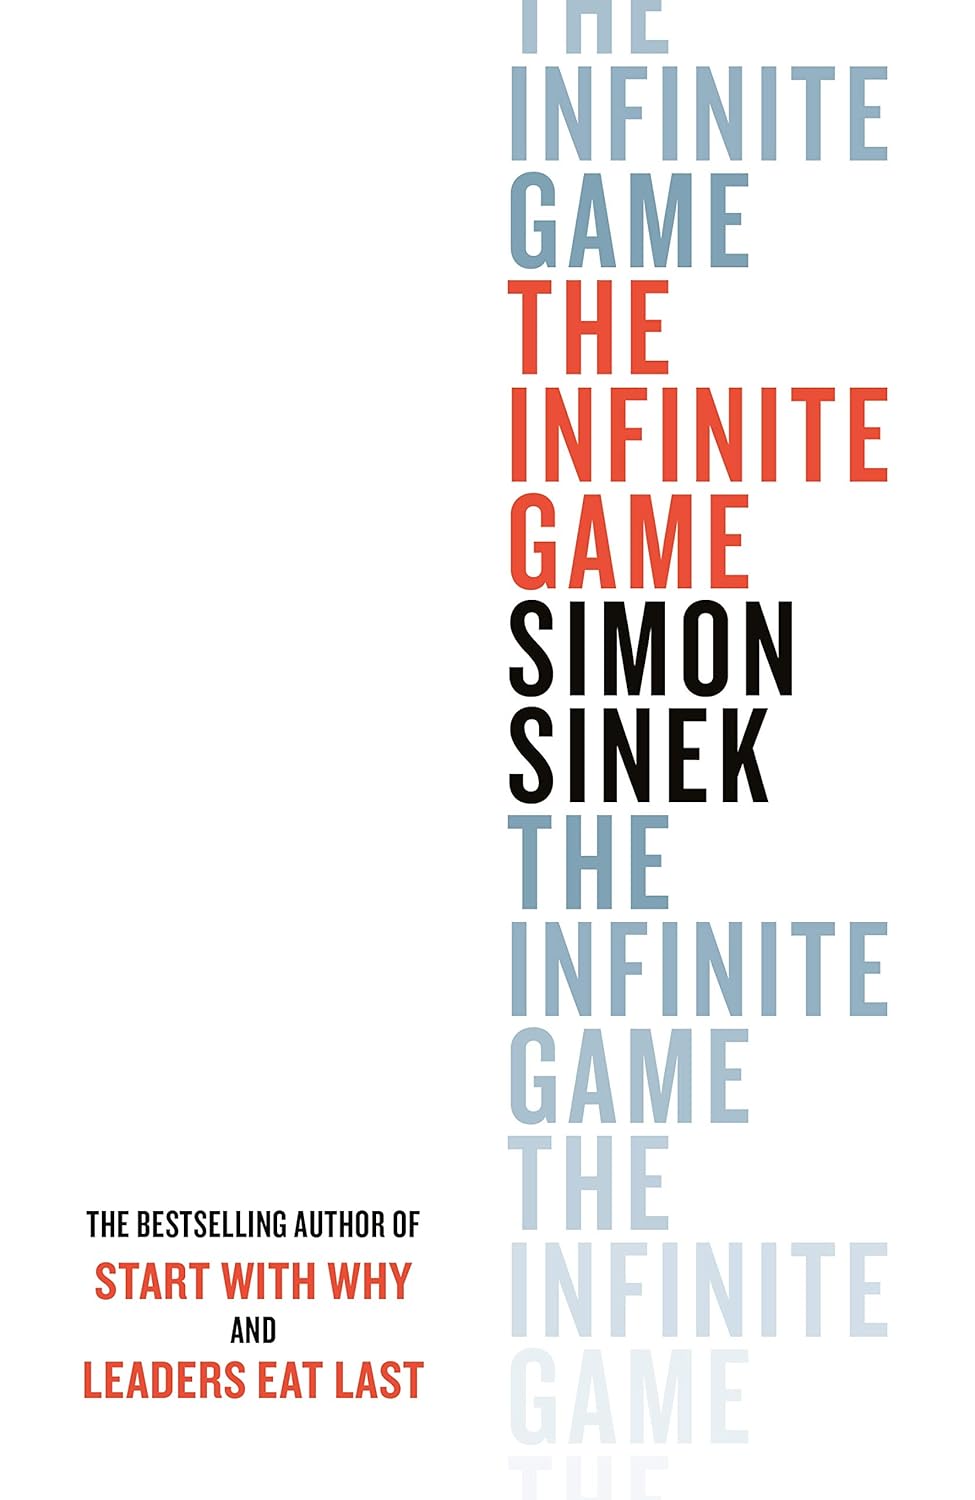 The Infinite Game Paperback  by Simon Sinek (Author)